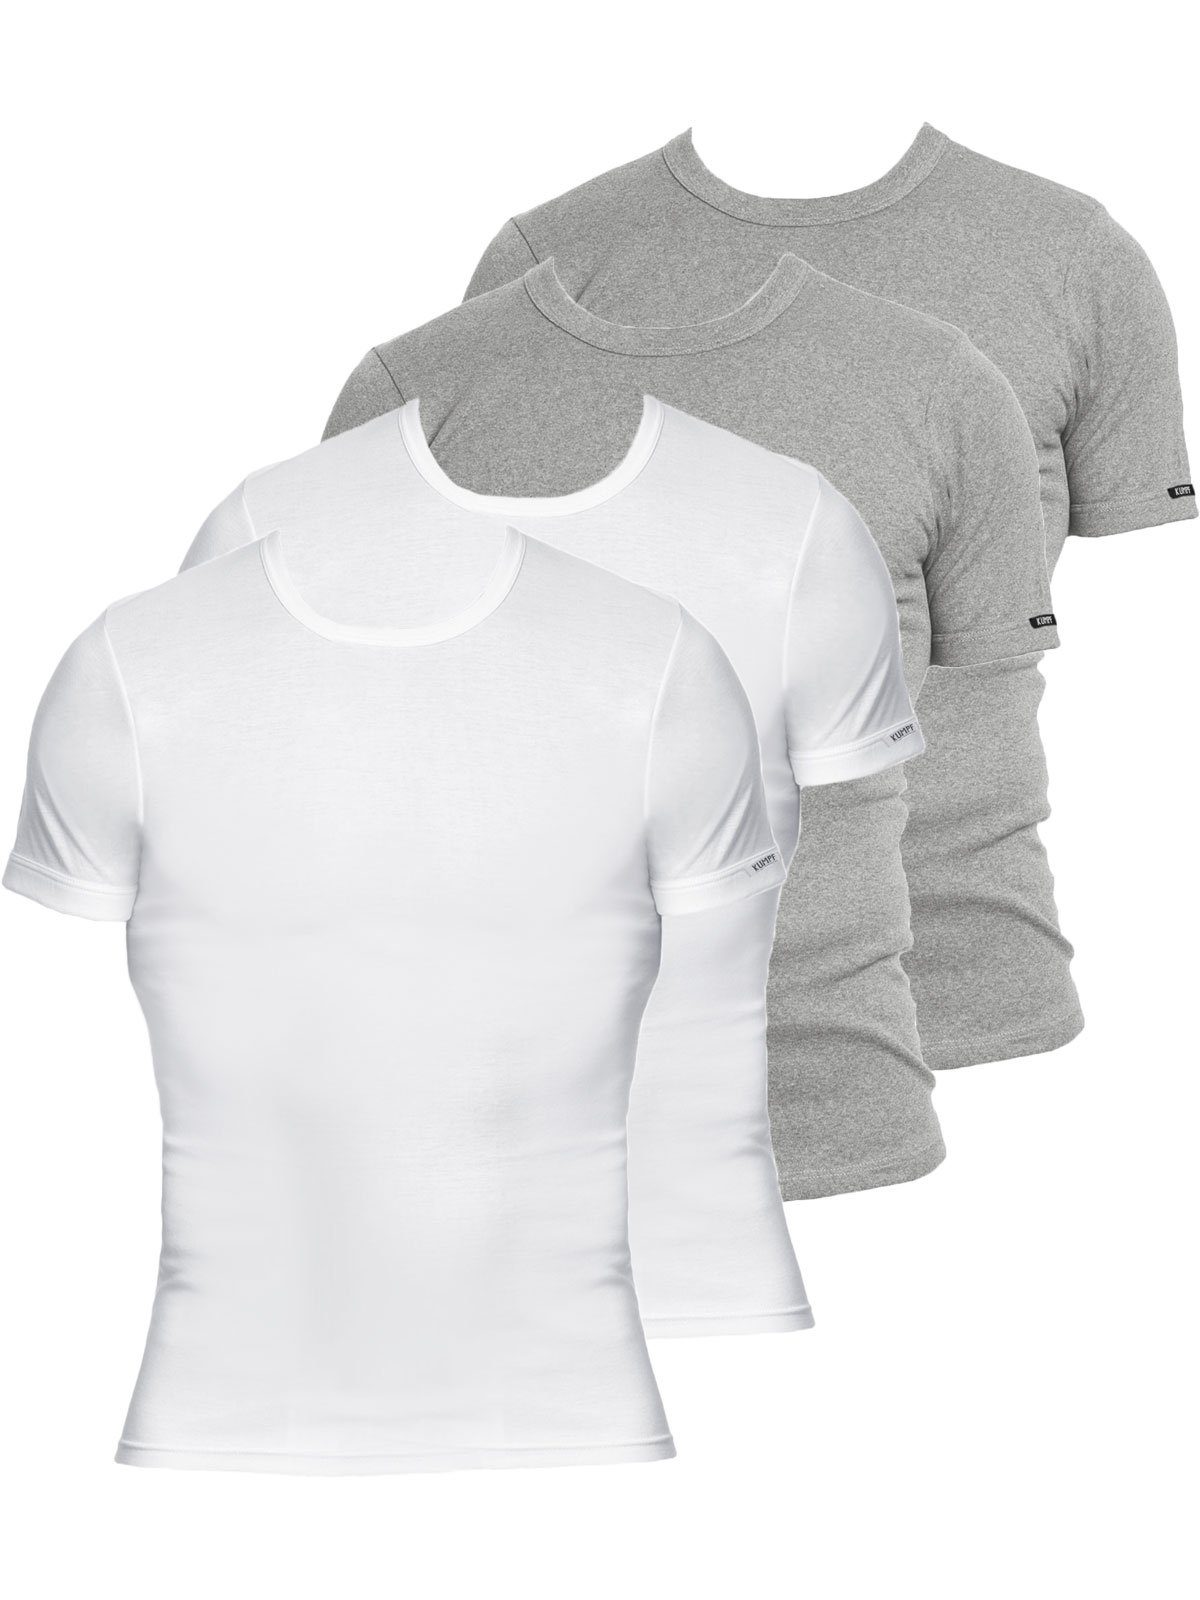 KUMPF Unterziehshirt 4er Sparpack Herren T-Shirt Bio Cotton (Spar-Set, 4-St) hohe Markenqualität stahlgrau-melange weiss